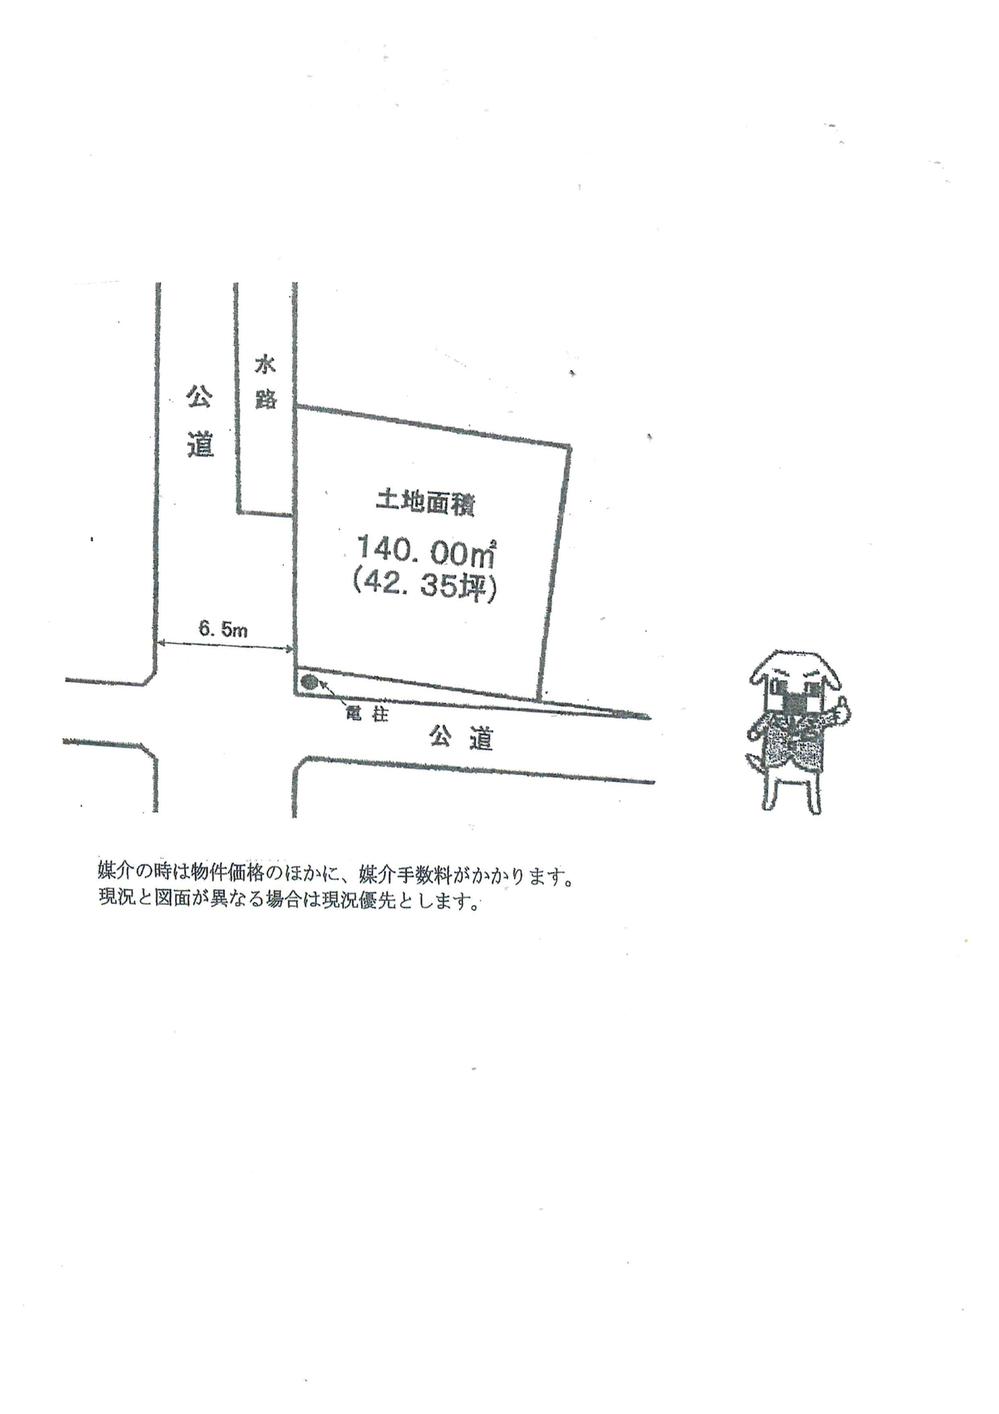 Compartment figure. Land price 15.5 million yen, Siemens to land area 140 sq m southwest of the corner lot.